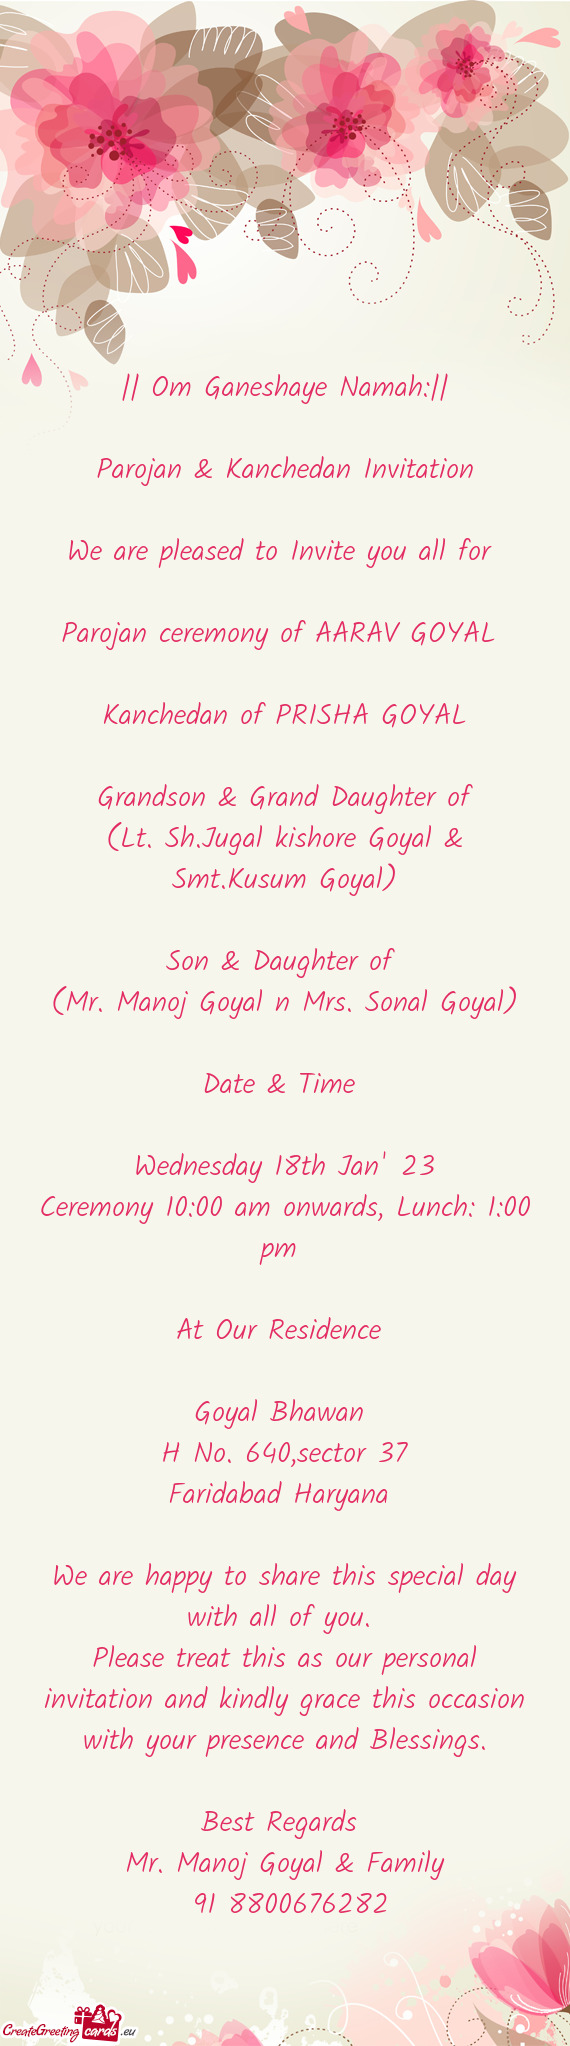 Parojan & Kanchedan Invitation